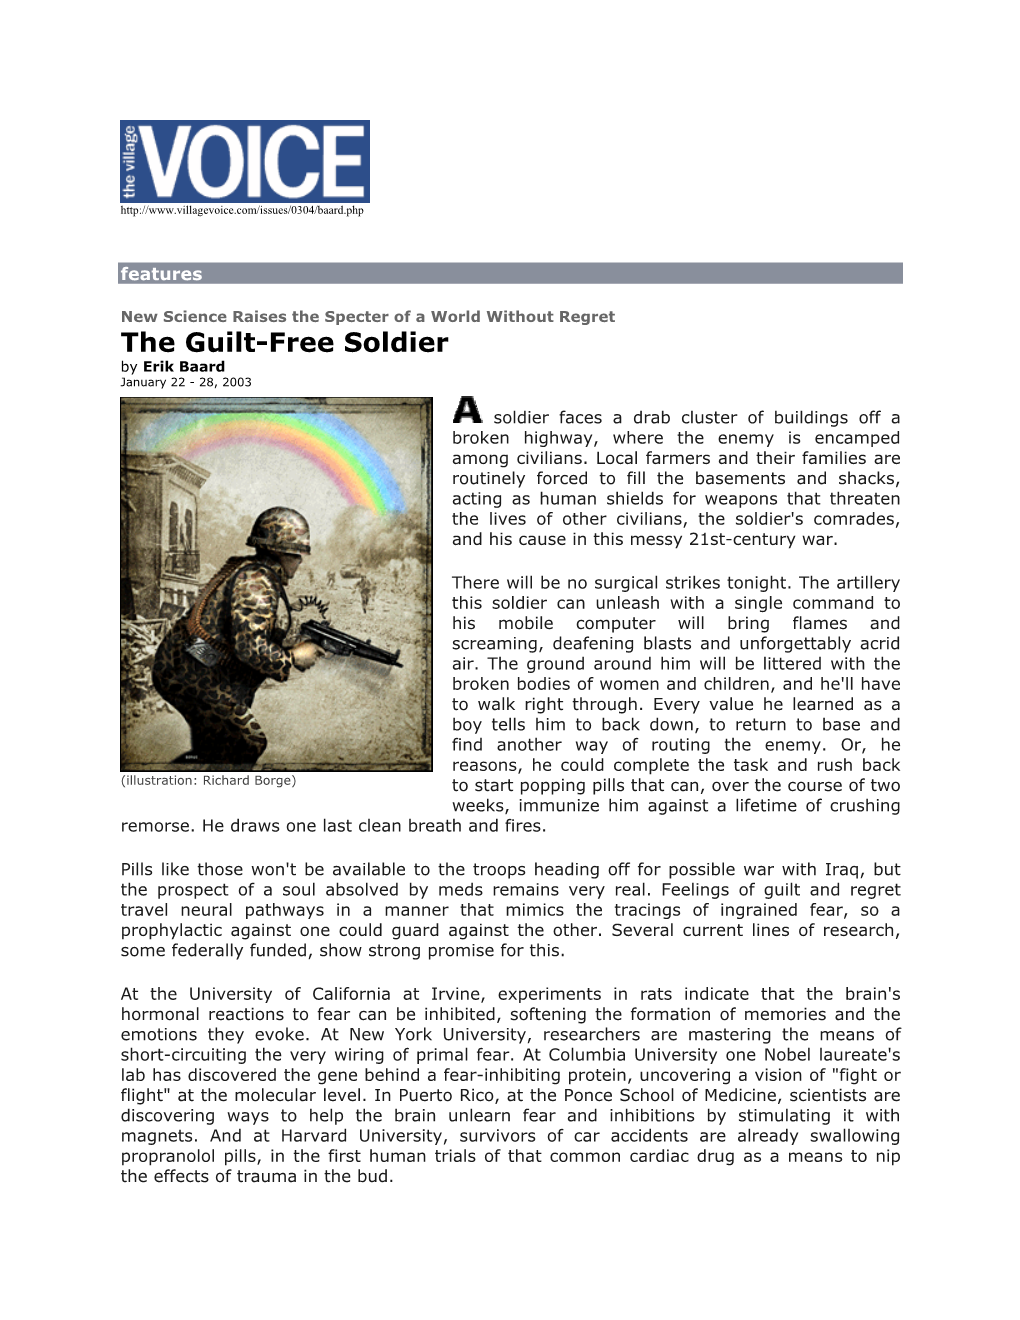 The Guilt-Free Soldier by Erik Baard January 22 - 28, 2003